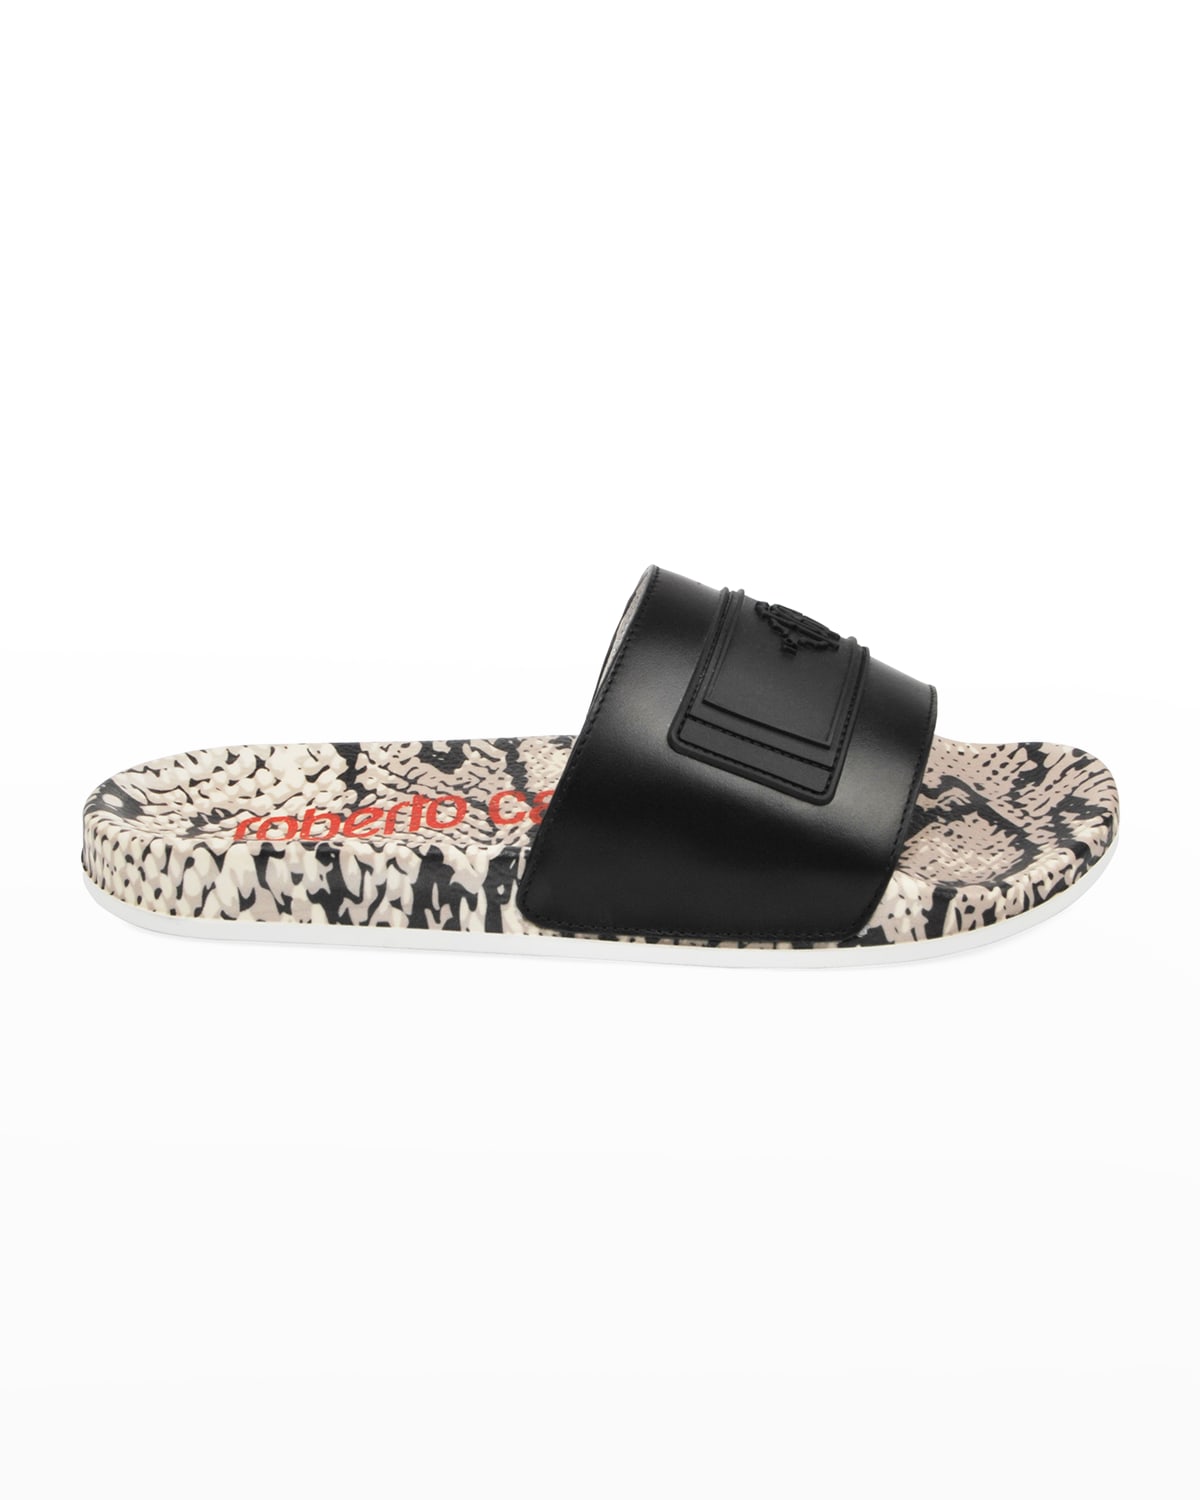 Men's Snakeskin-Print Leather Pool Slide Sandals